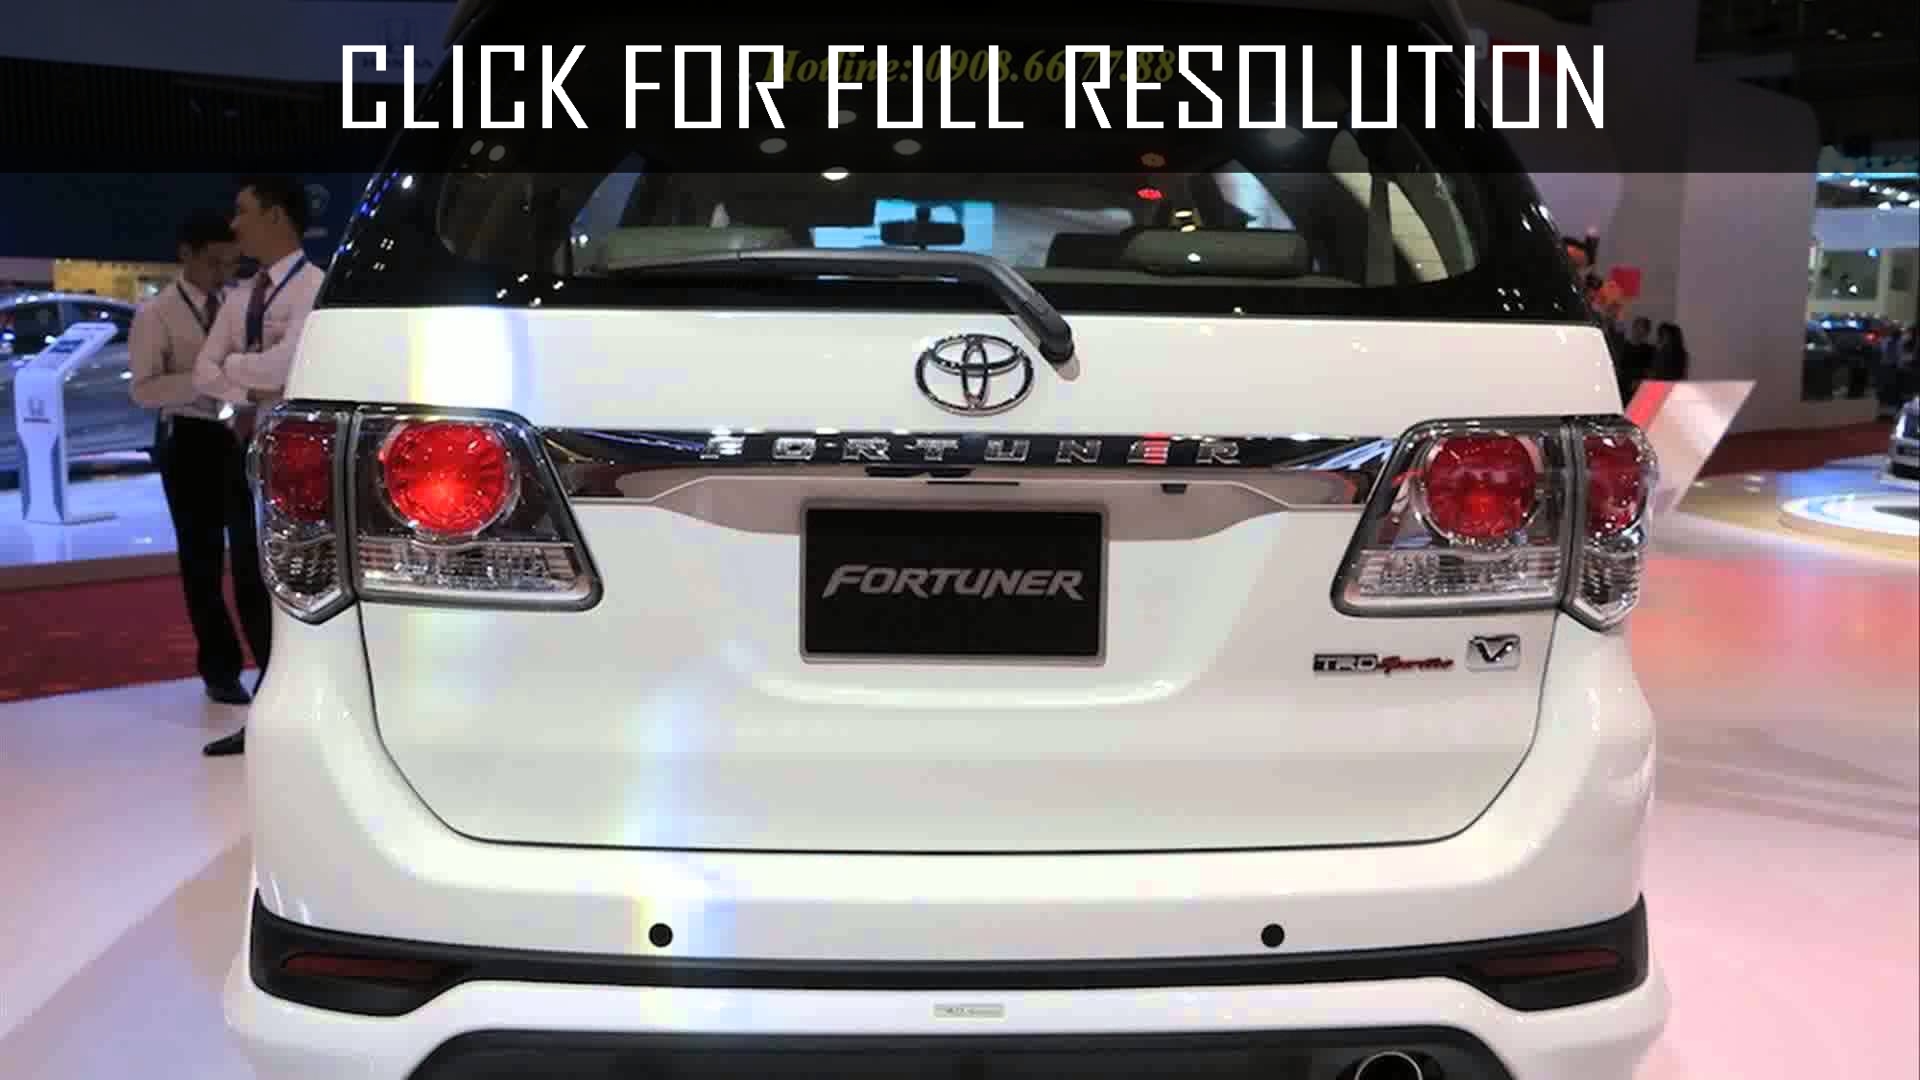 Toyota Fortuner Trd 2015